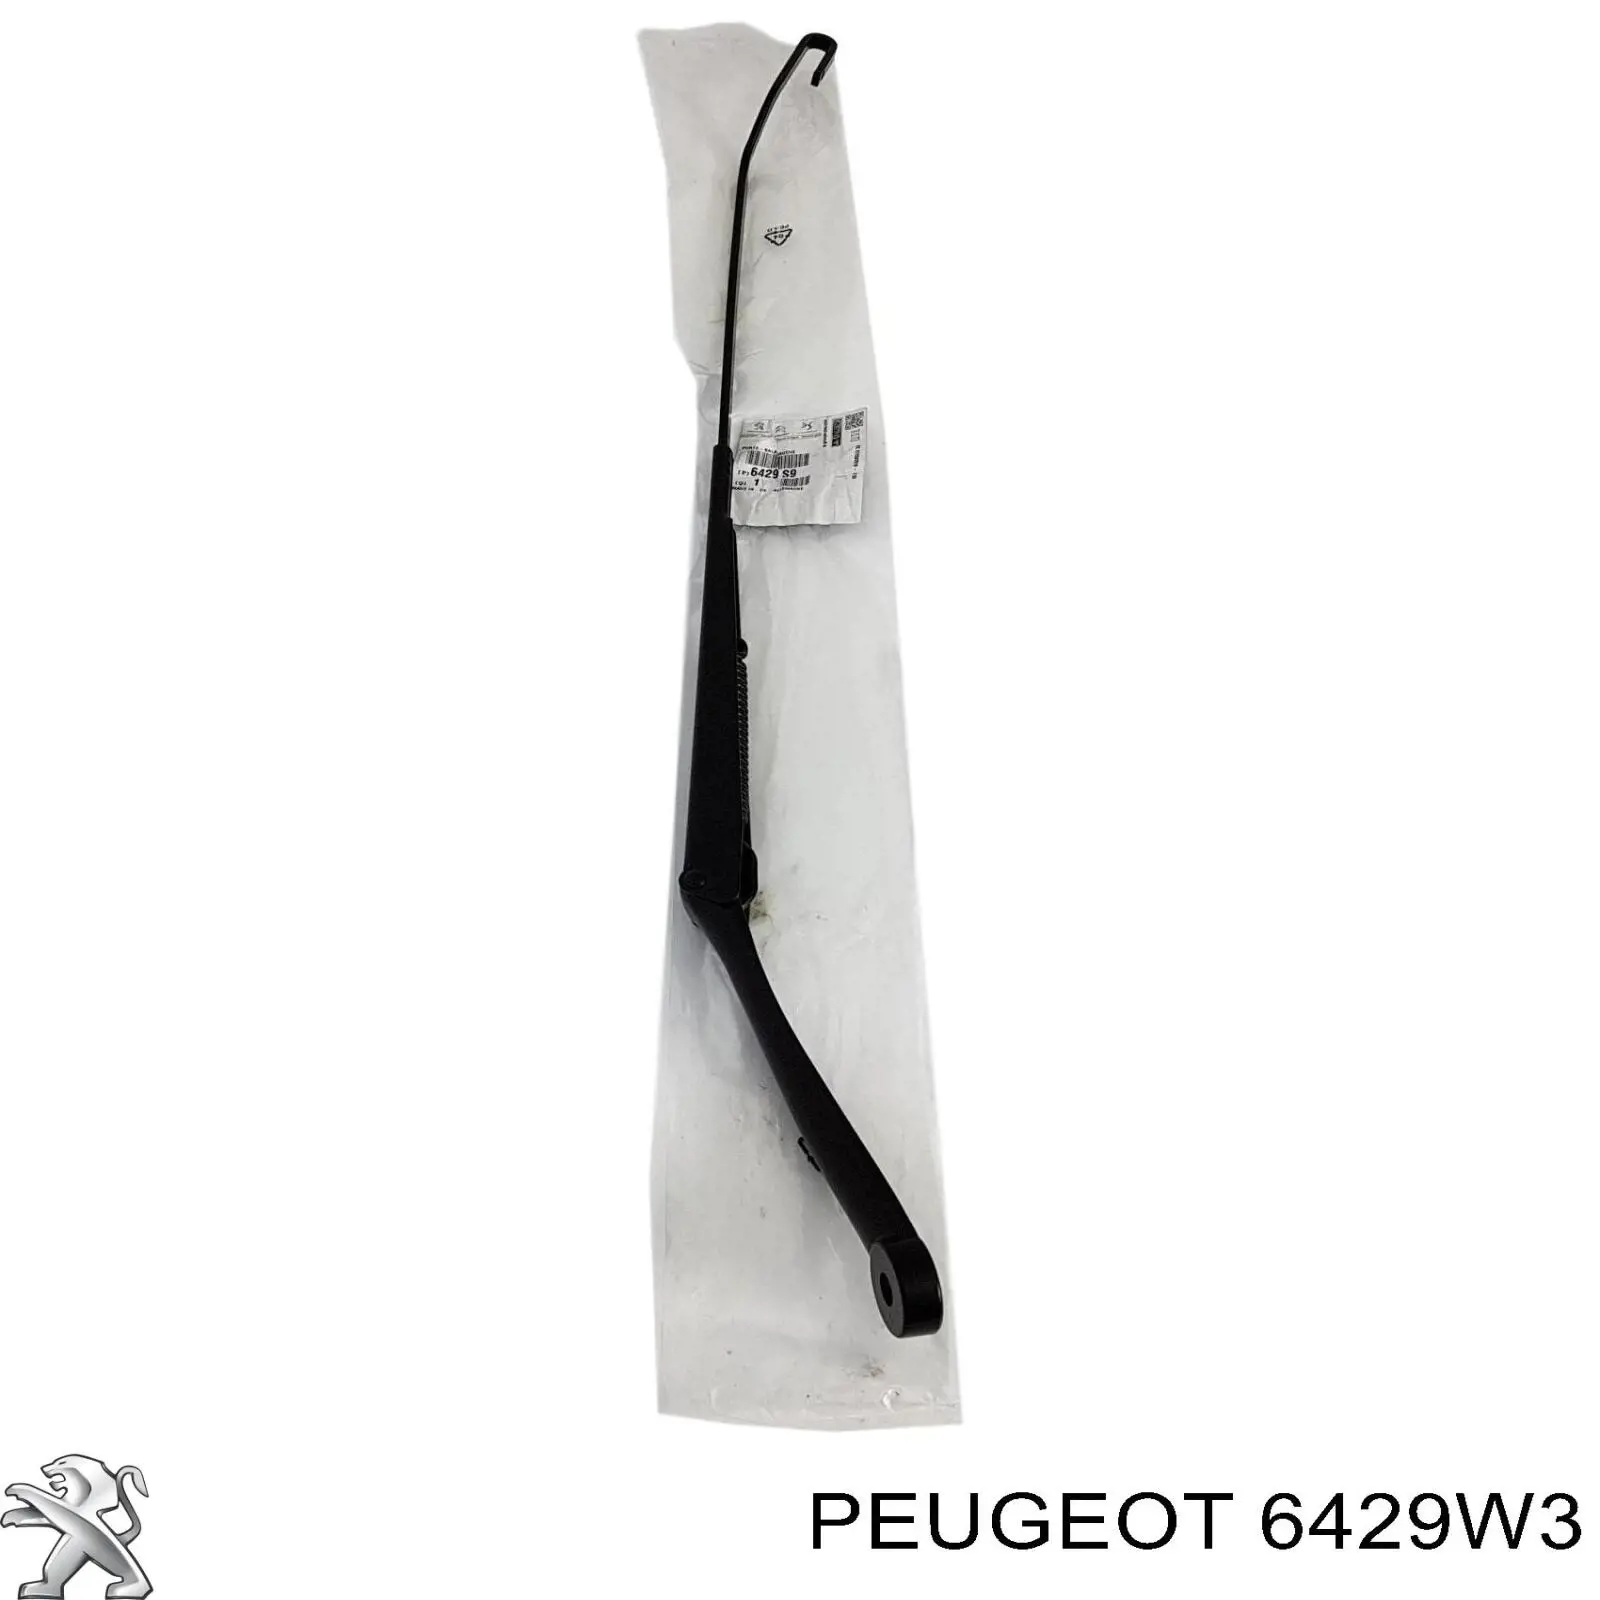 00006429W3 Peugeot/Citroen brazo del limpiaparabrisas, trasero